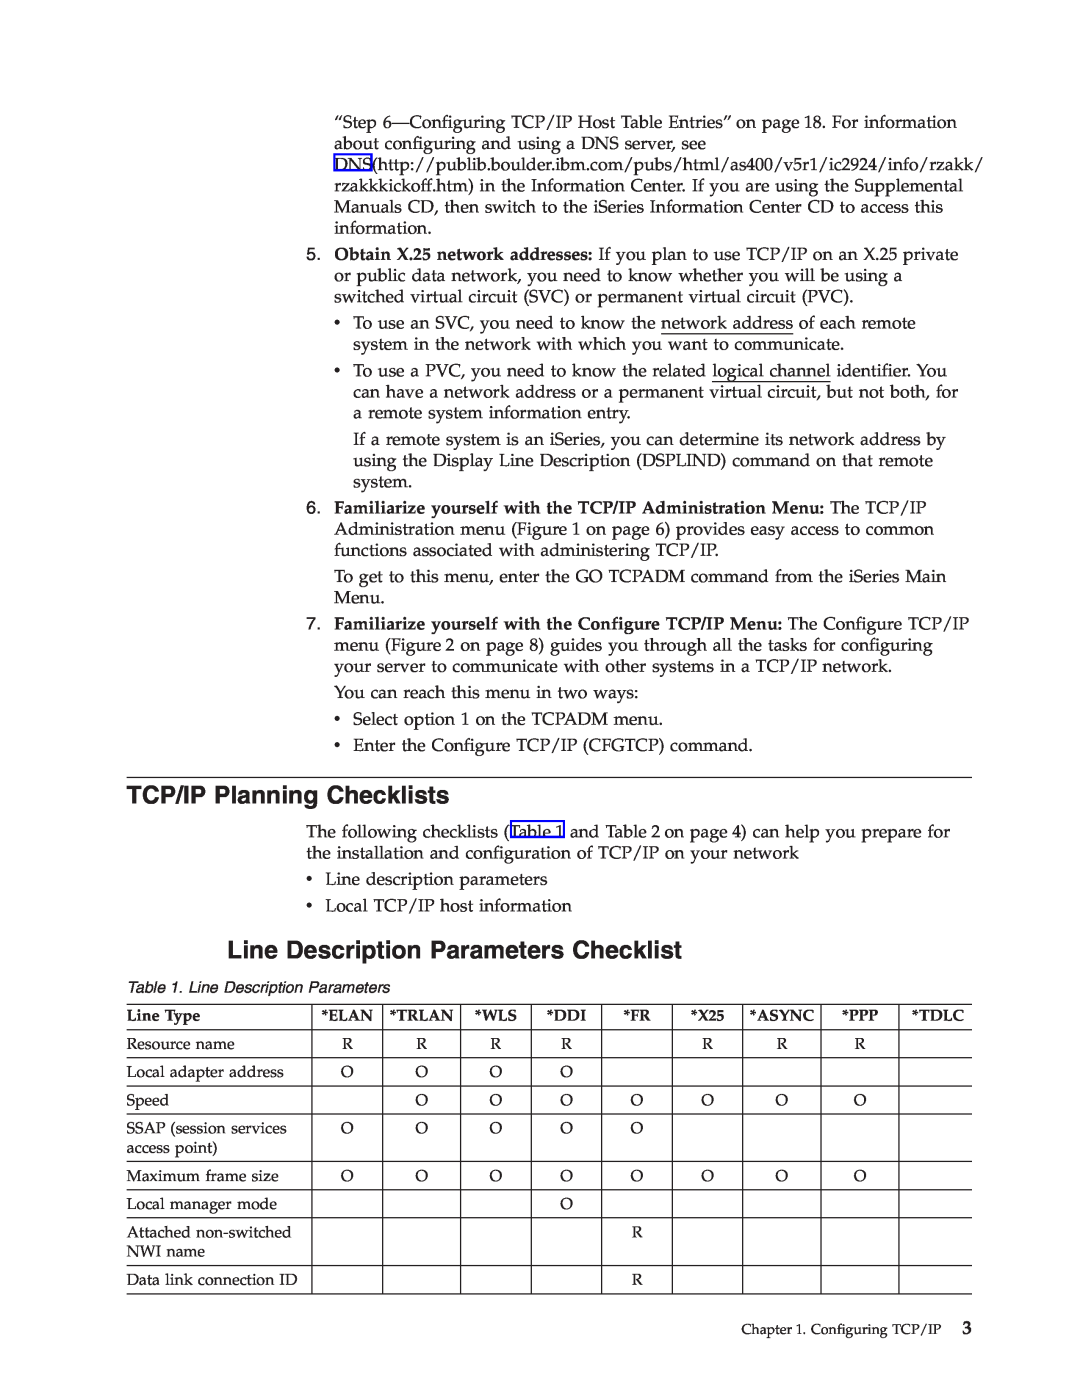 IBM SC41-5420-04 manual TCP/IP Planning Checklists, Line Description Parameters Checklist 